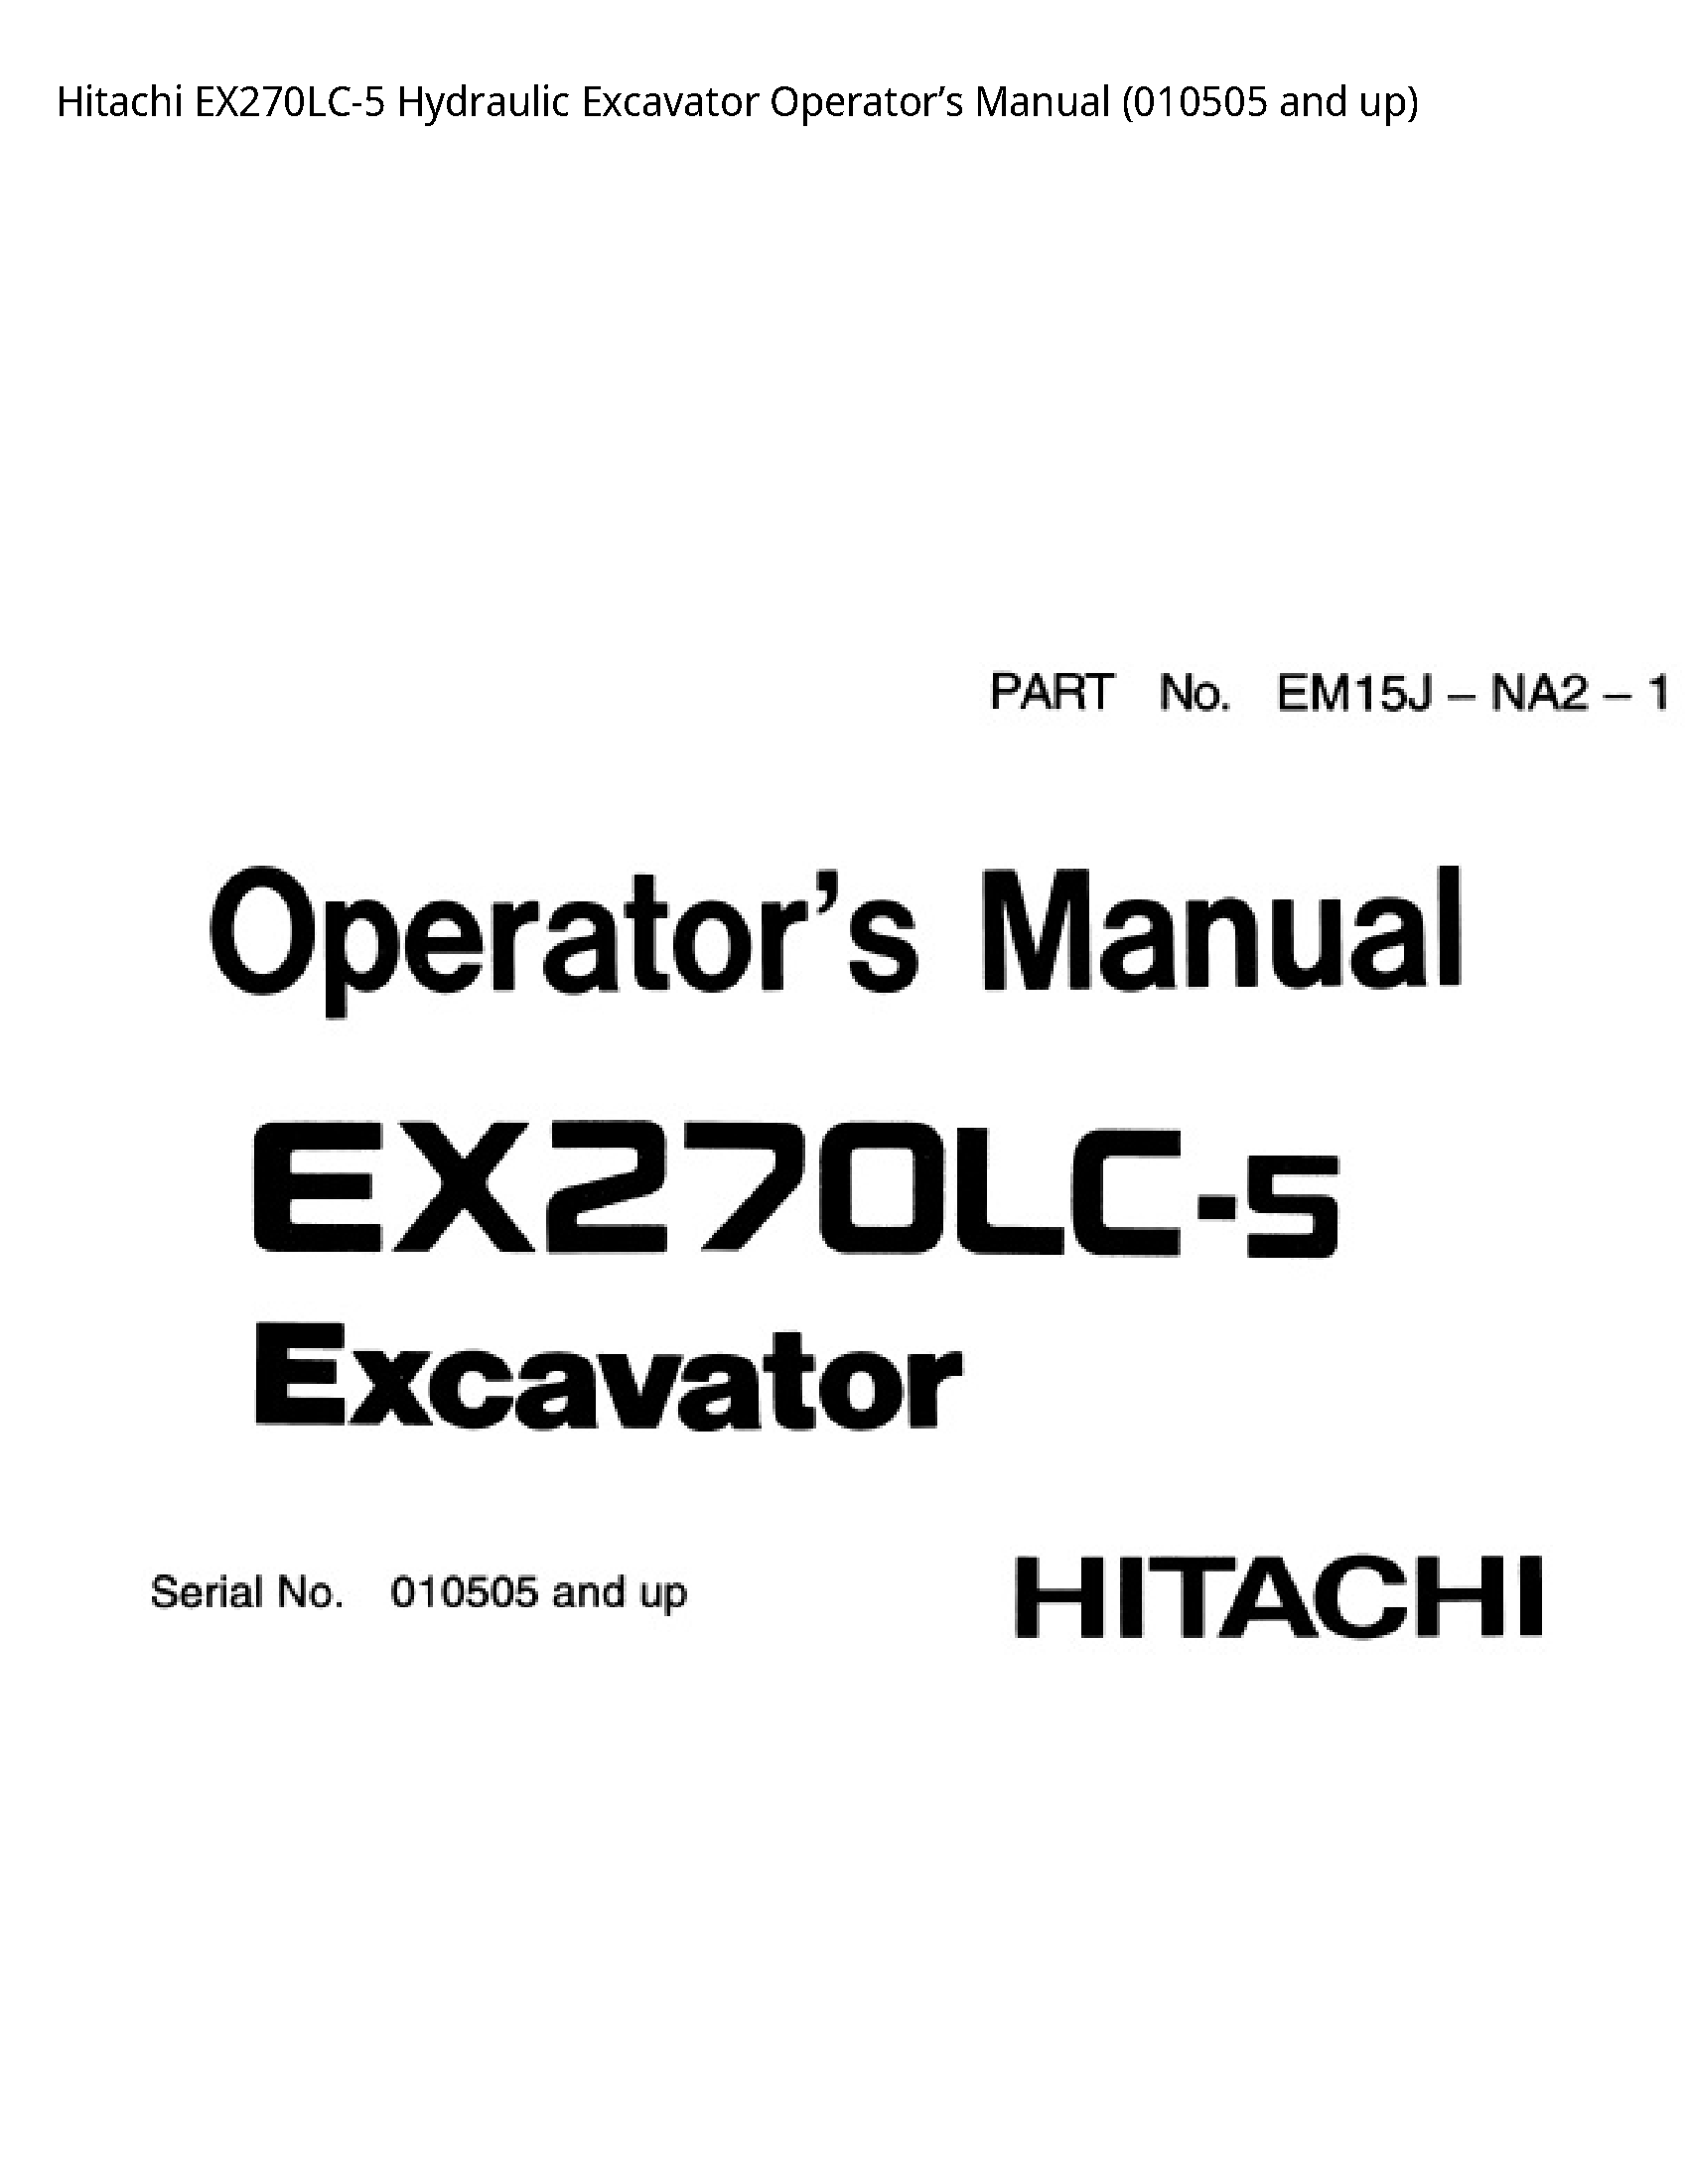 Hitachi EX270LC-5 Hydraulic Excavator Operator’s manual